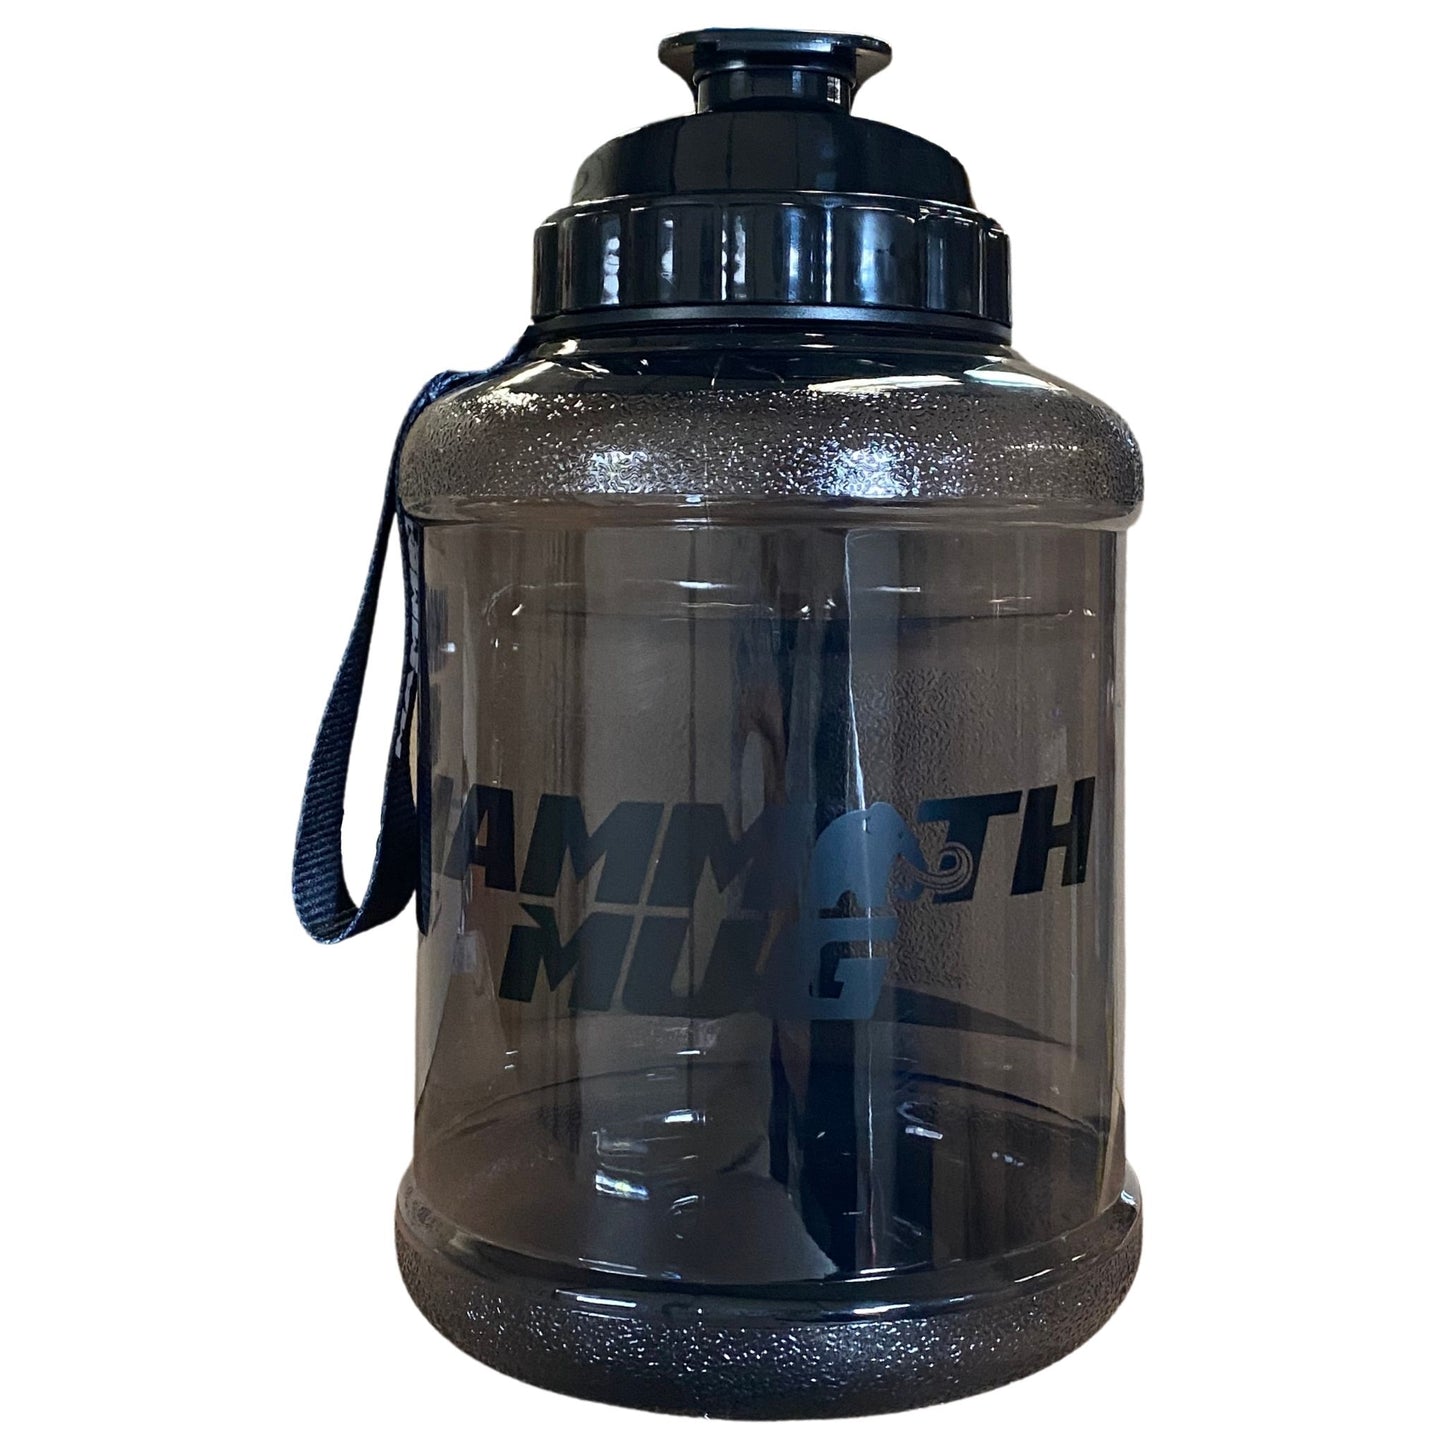 Best Large Water Bottle - Mammoth Mug 2.5 litre water bottle in clear black front